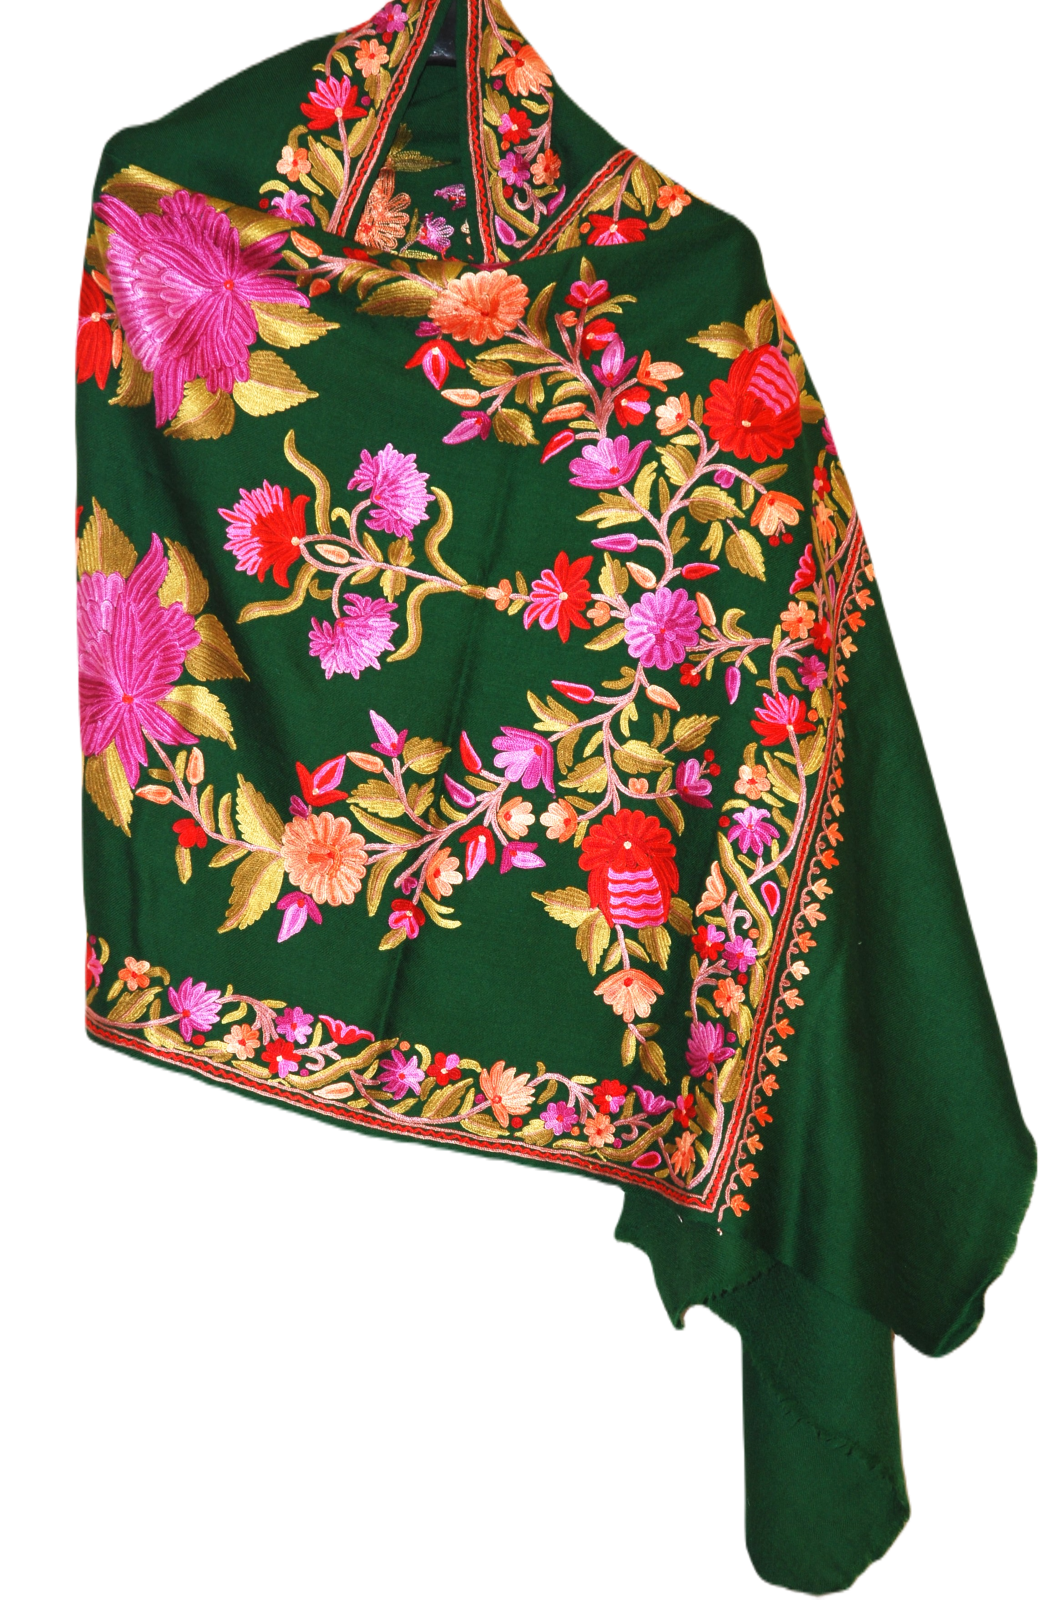 Kashmir Wool Shawl Wrap Throw Green, Multicolor Embroidery #WS-151